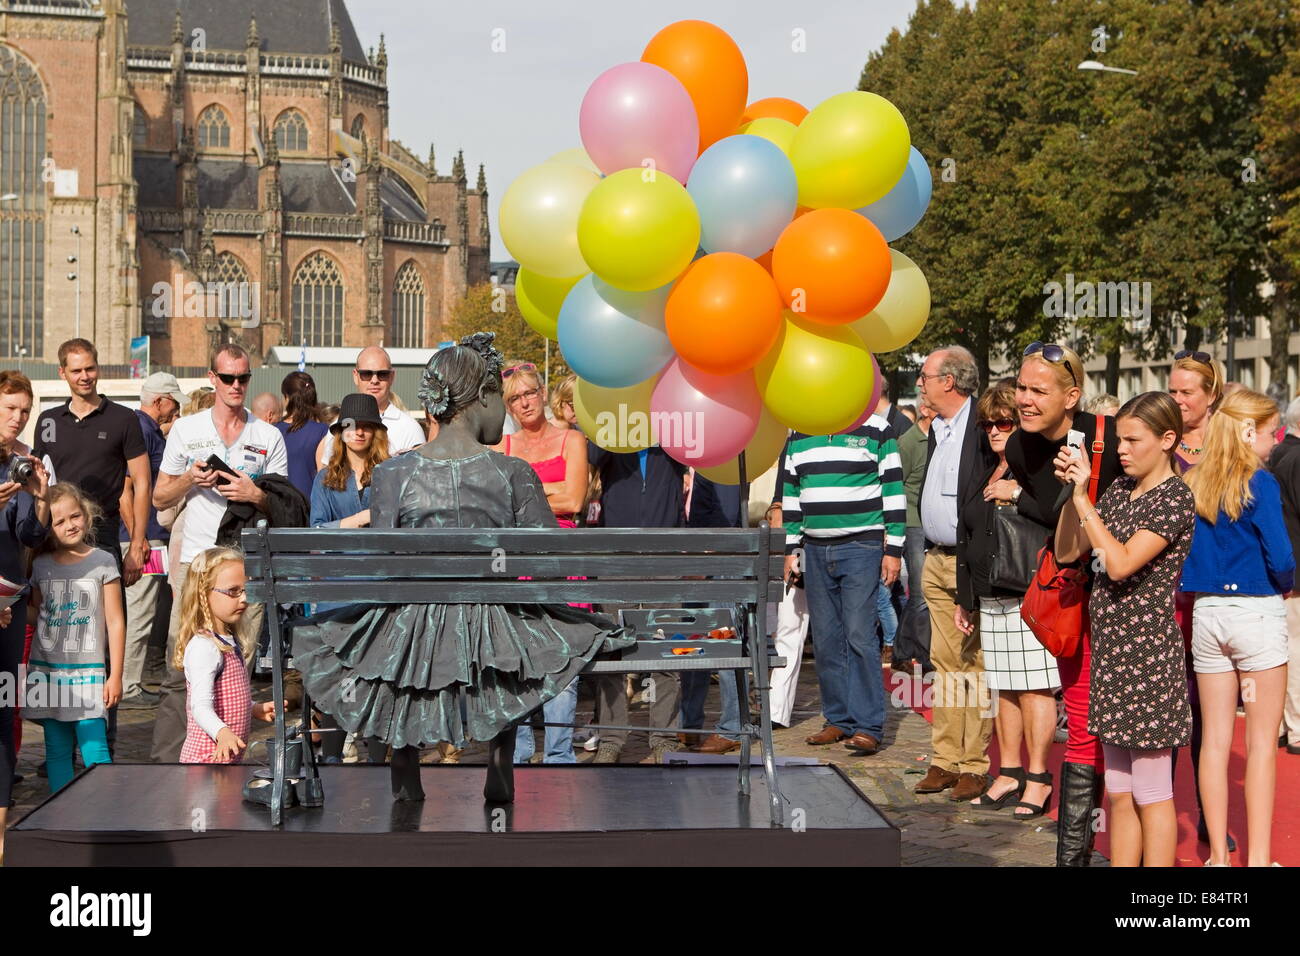 Arnhem, Netherlands - September 28, 2014: Girl with balloons on chair during the world championships living statues in Arnhem Stock Photo